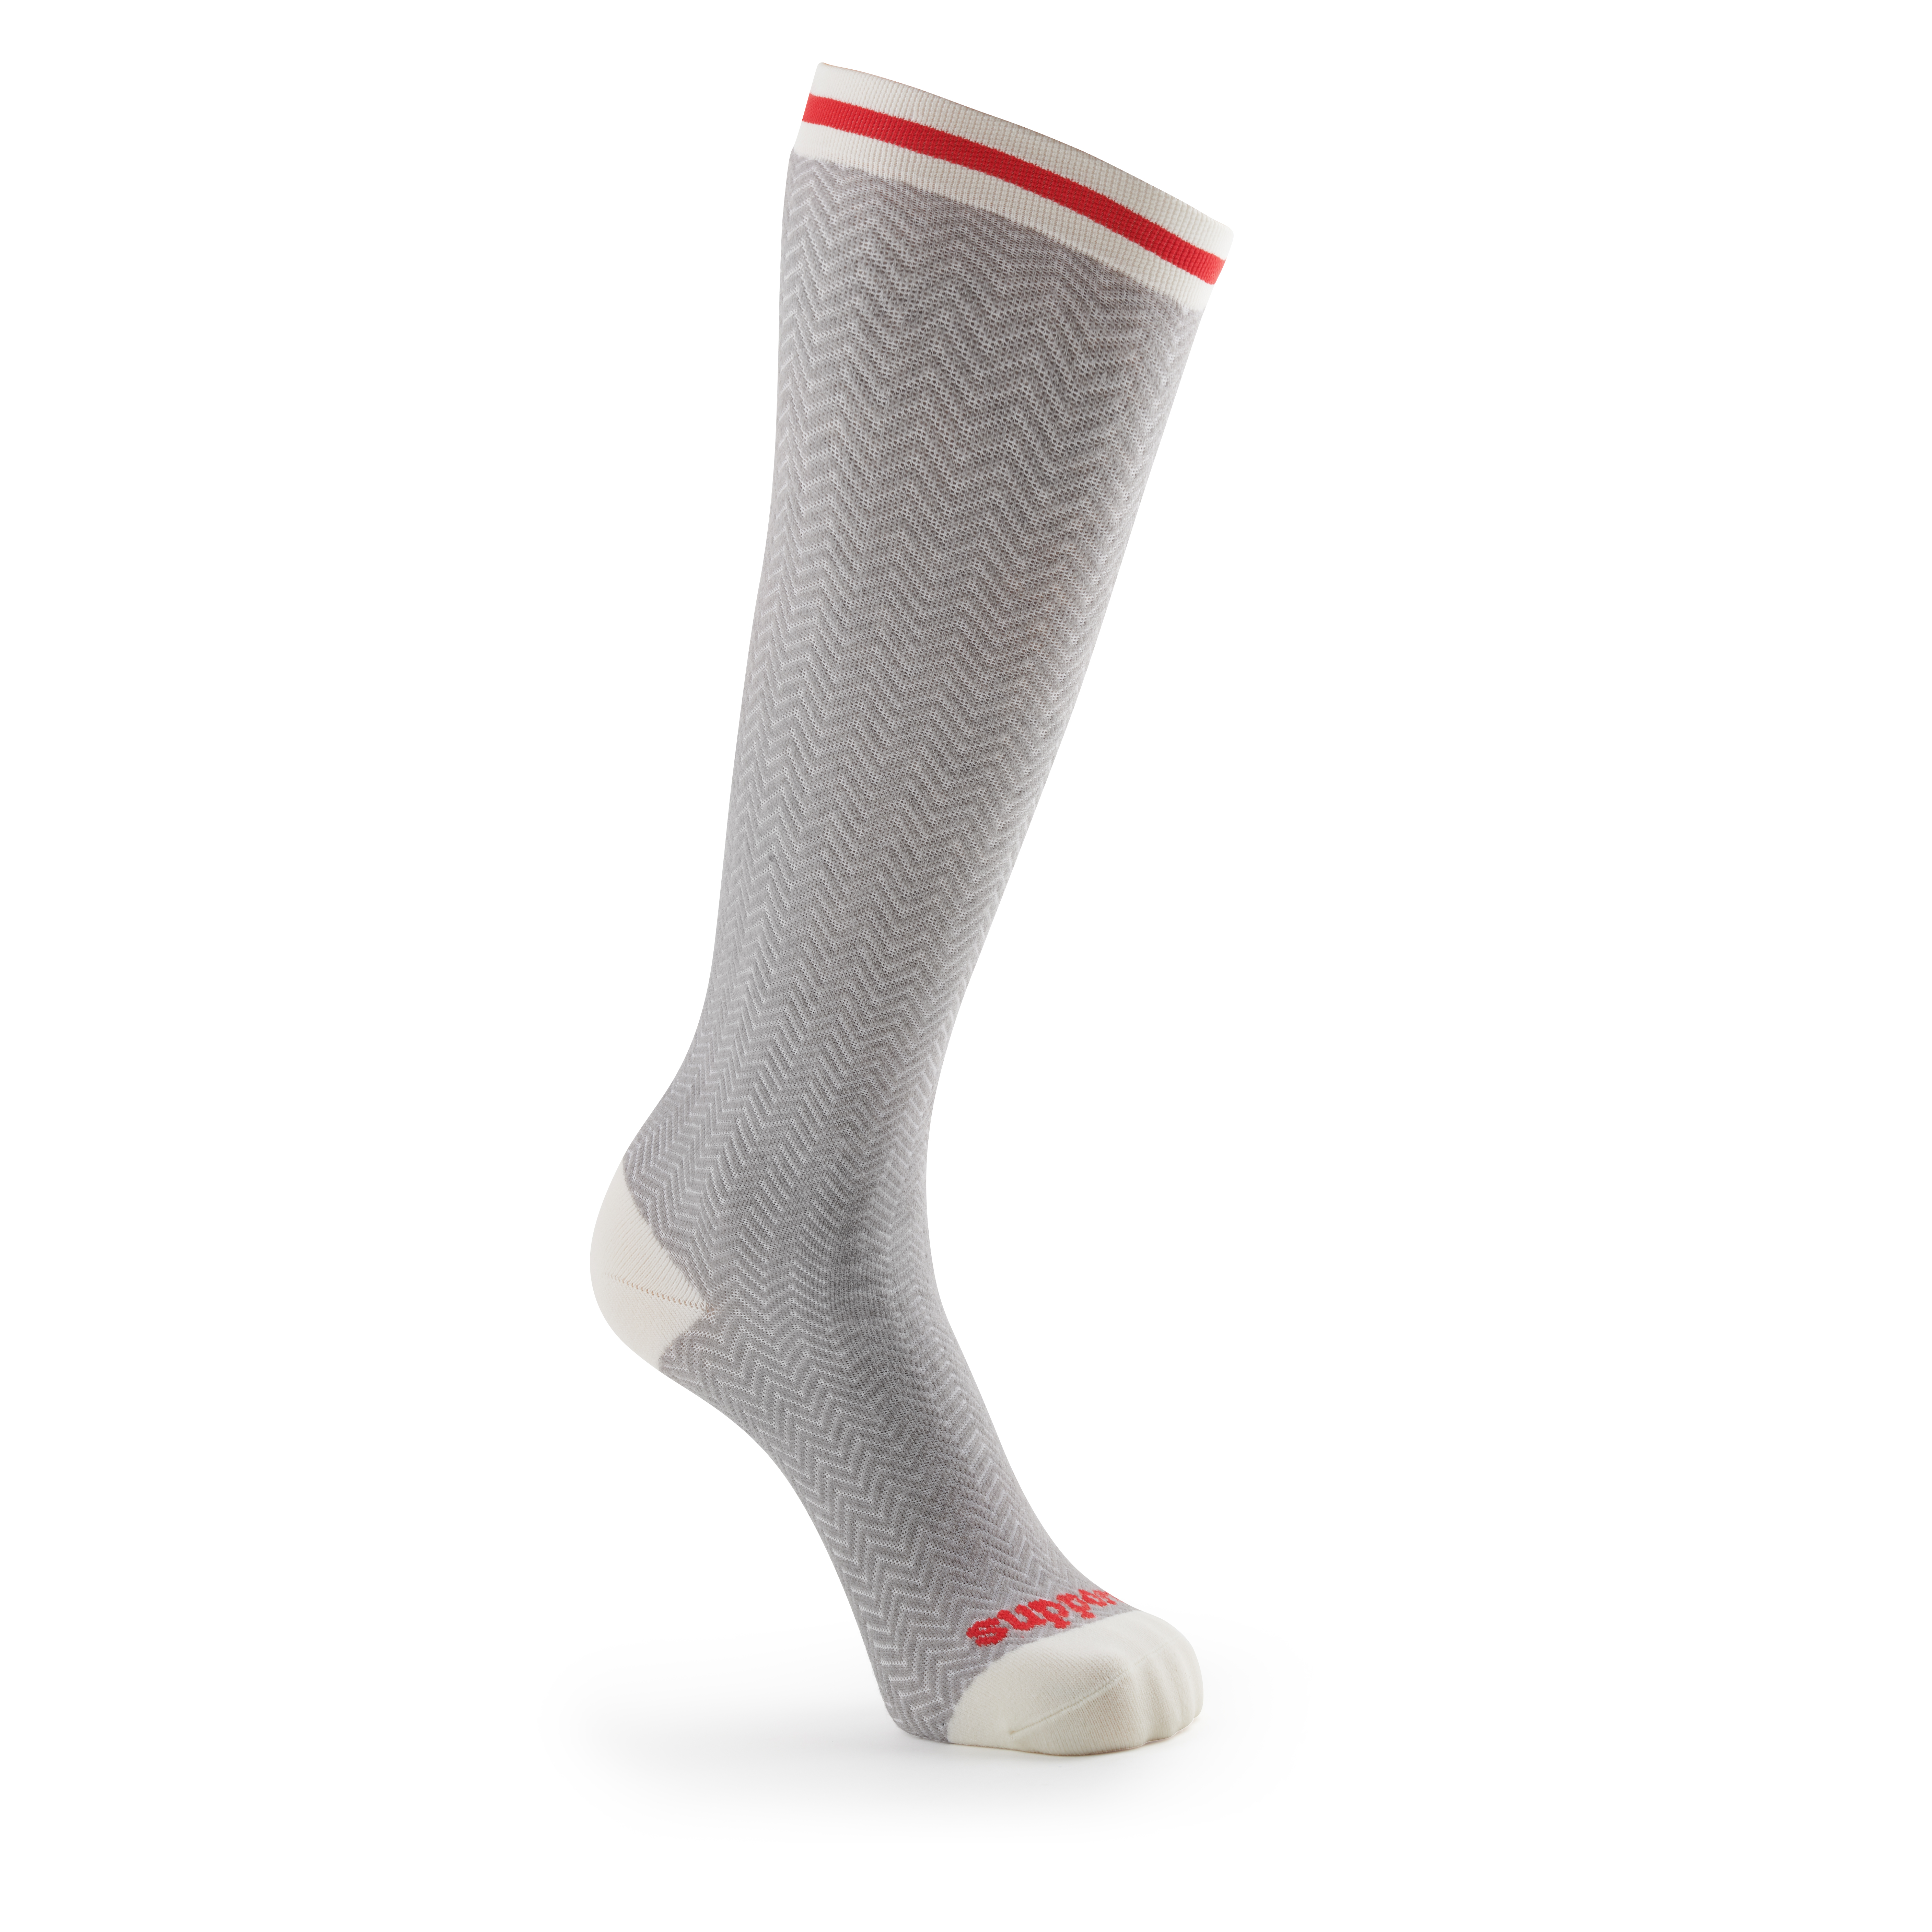 Supporo Thermal Merino Wool Compression Socks